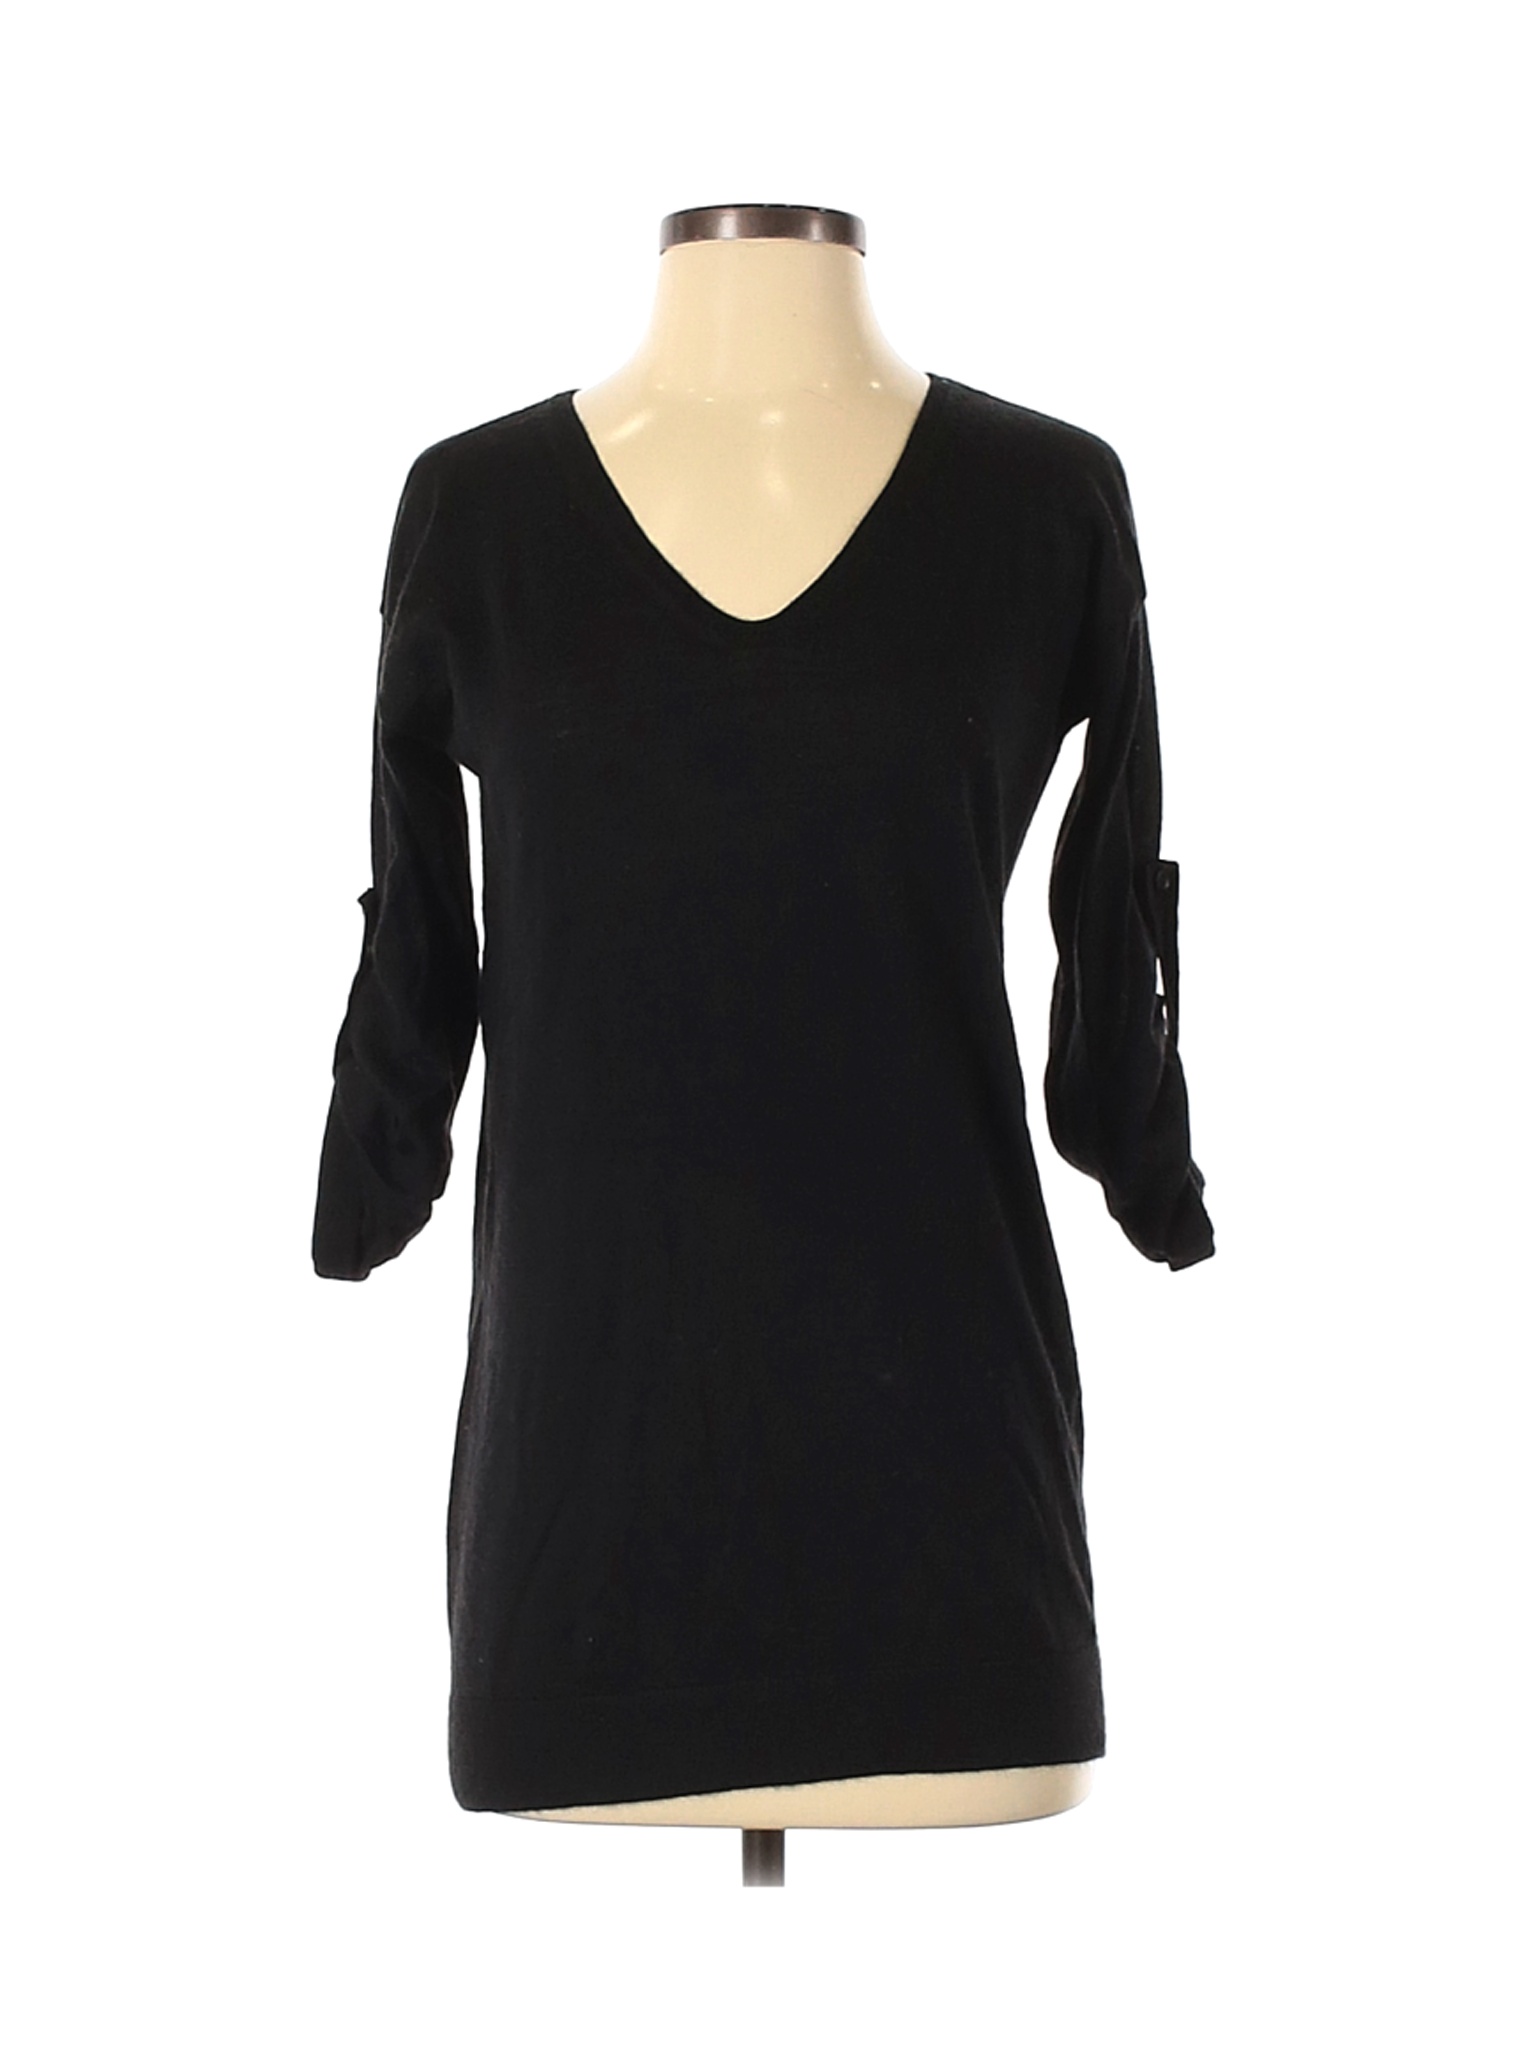 Ann Taylor Factory Women Black Pullover Sweater XS | eBay